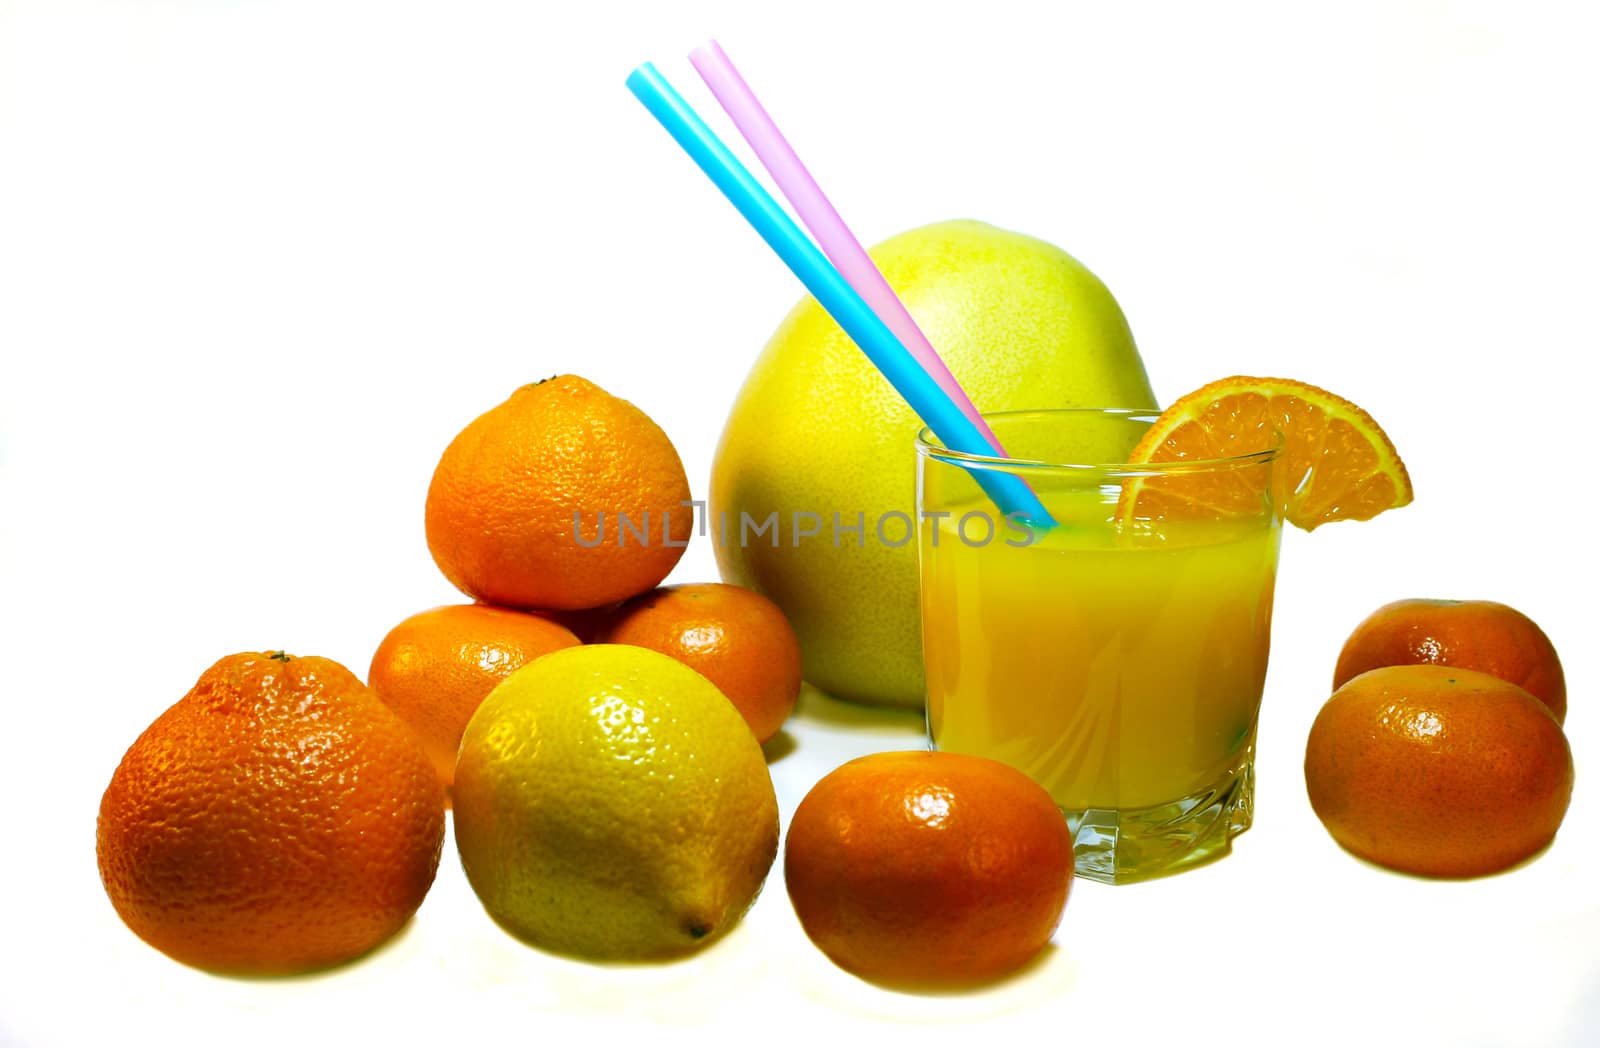 Citrus juice vitamin mix by LenoraA